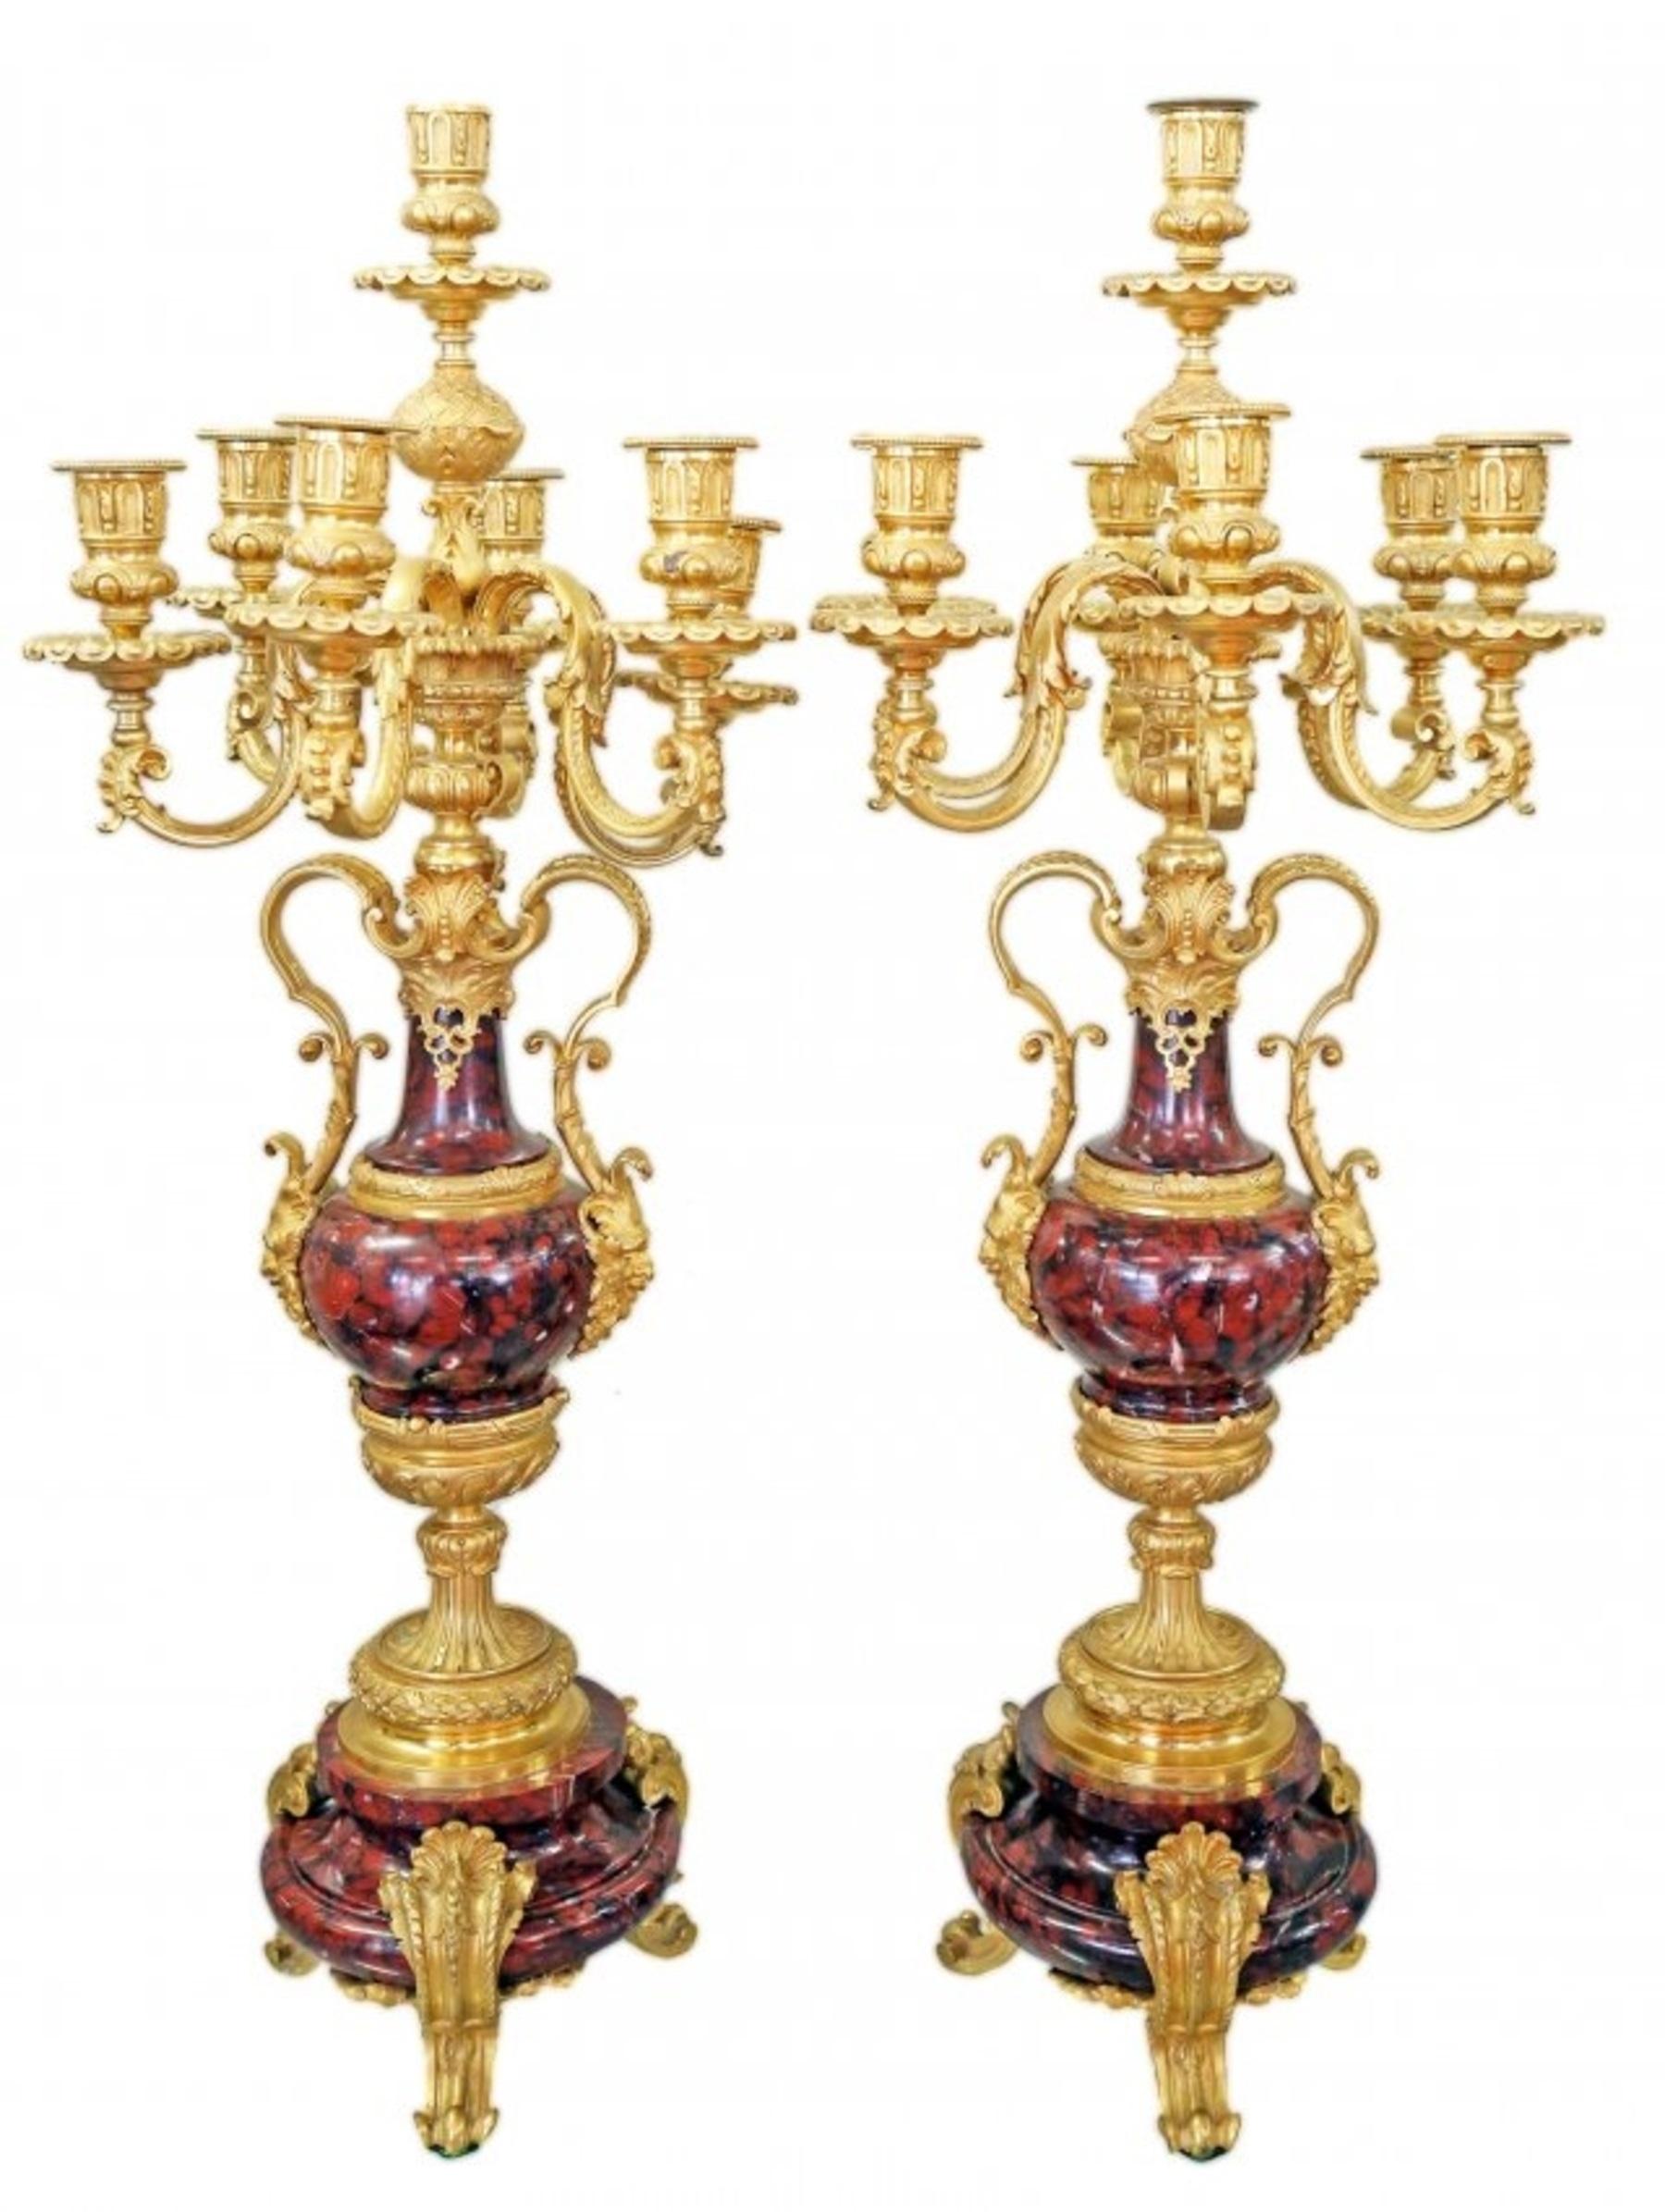 Louis XV style gilt bronze mounted marble seven-light candelabra
Each classical 